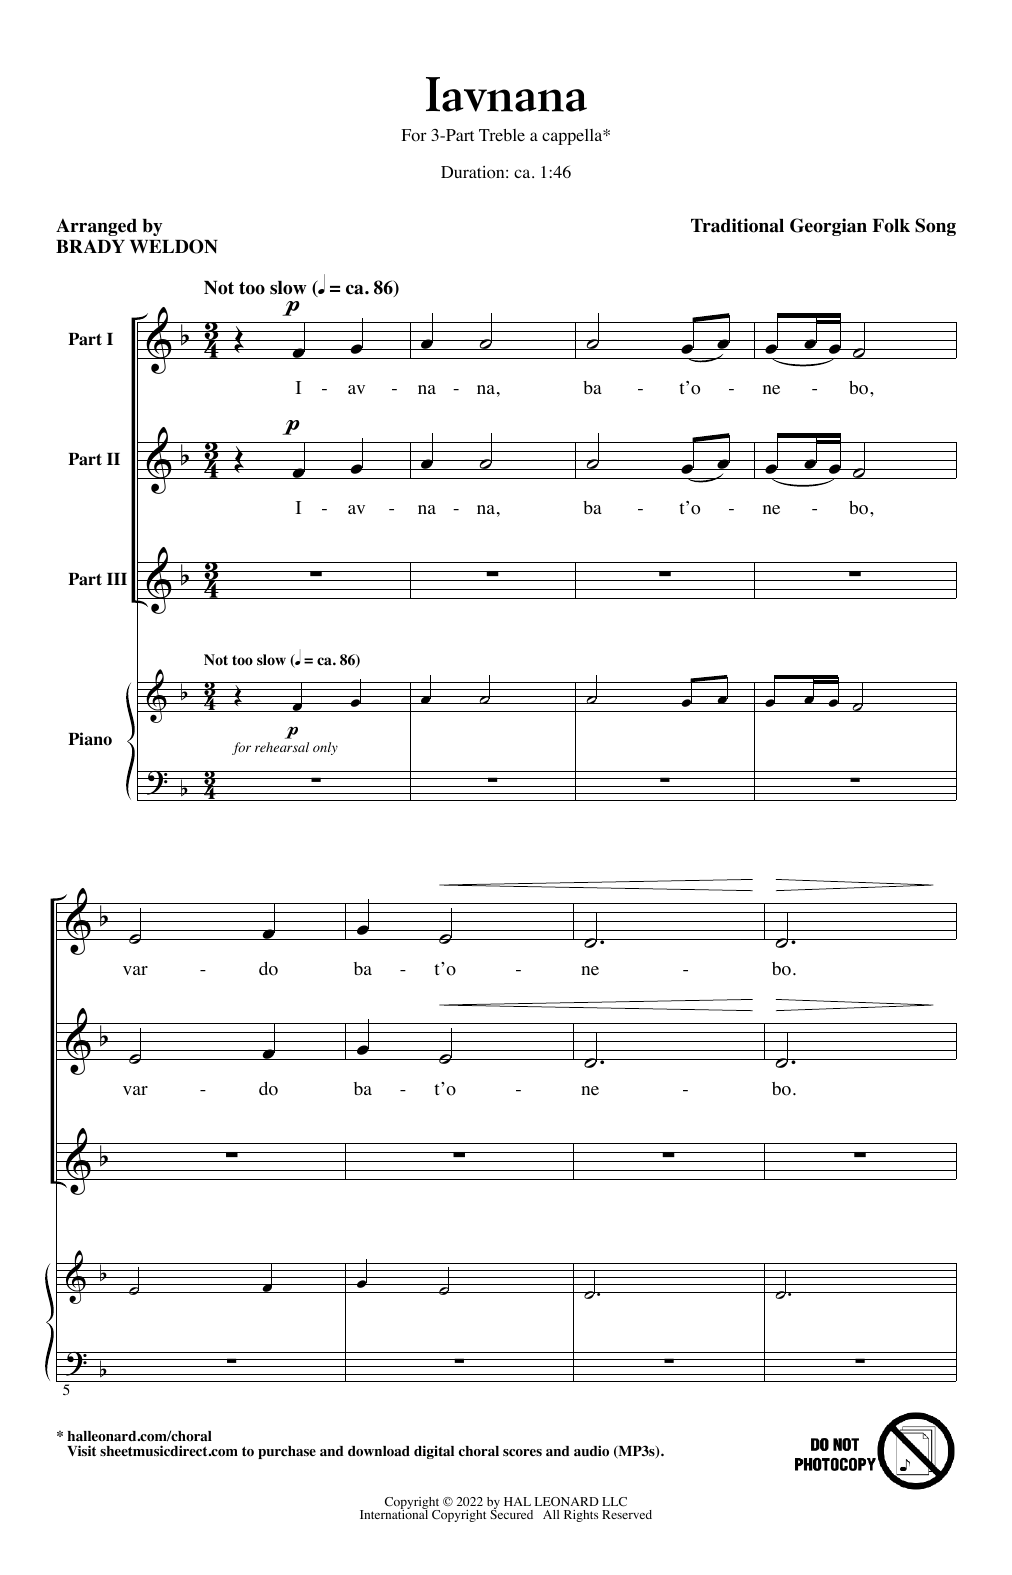 Traditional Georgian Folk Song Iavnana (arr. Brady Weldon) Sheet Music Notes & Chords for 3-Part Treble Choir - Download or Print PDF